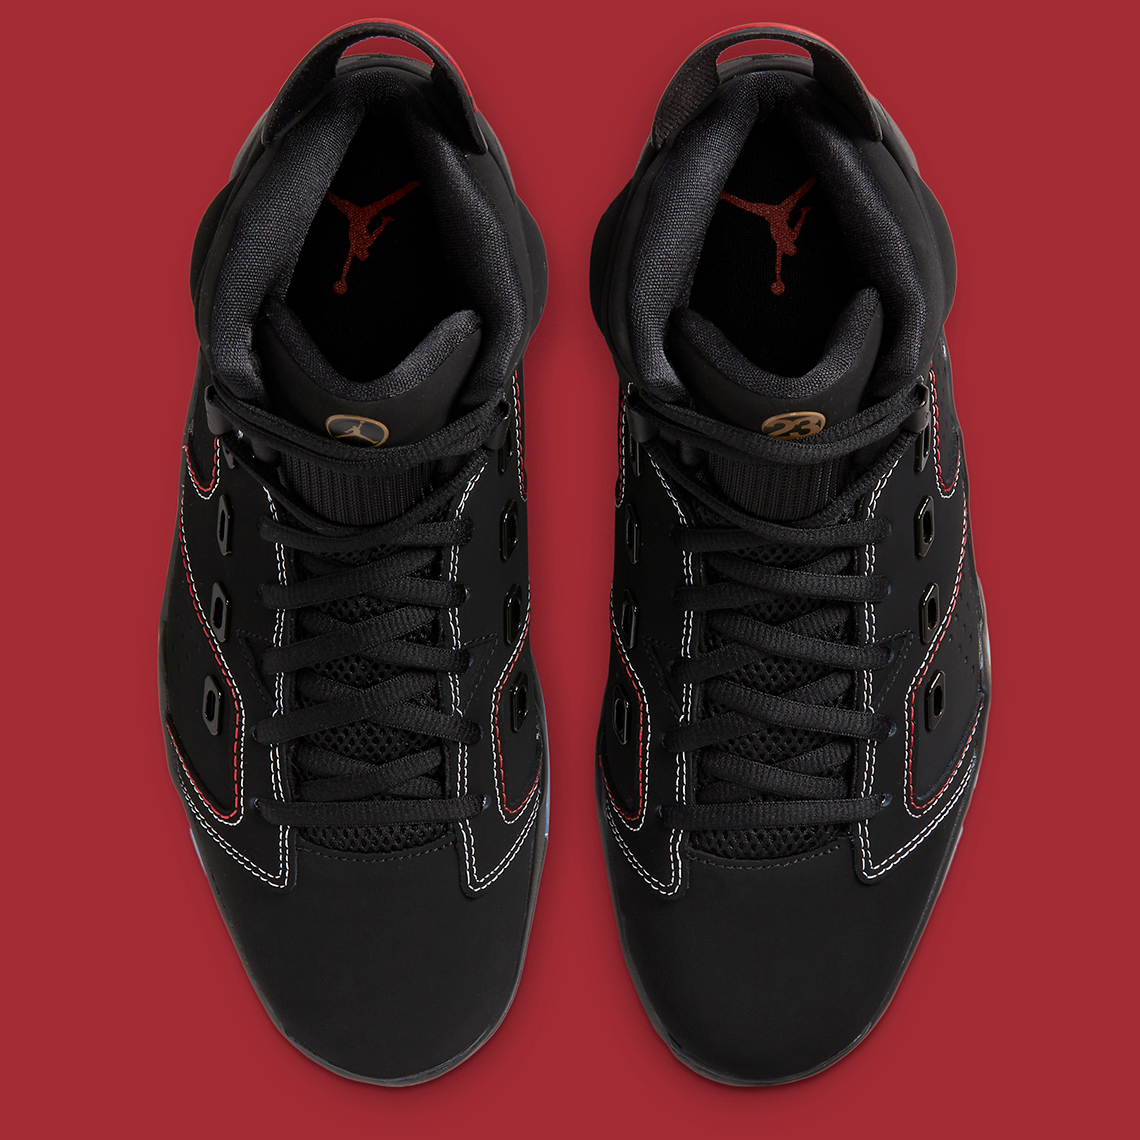 Air Jordan 3 Retro “Cardinal Red” – The Darkside Initiative